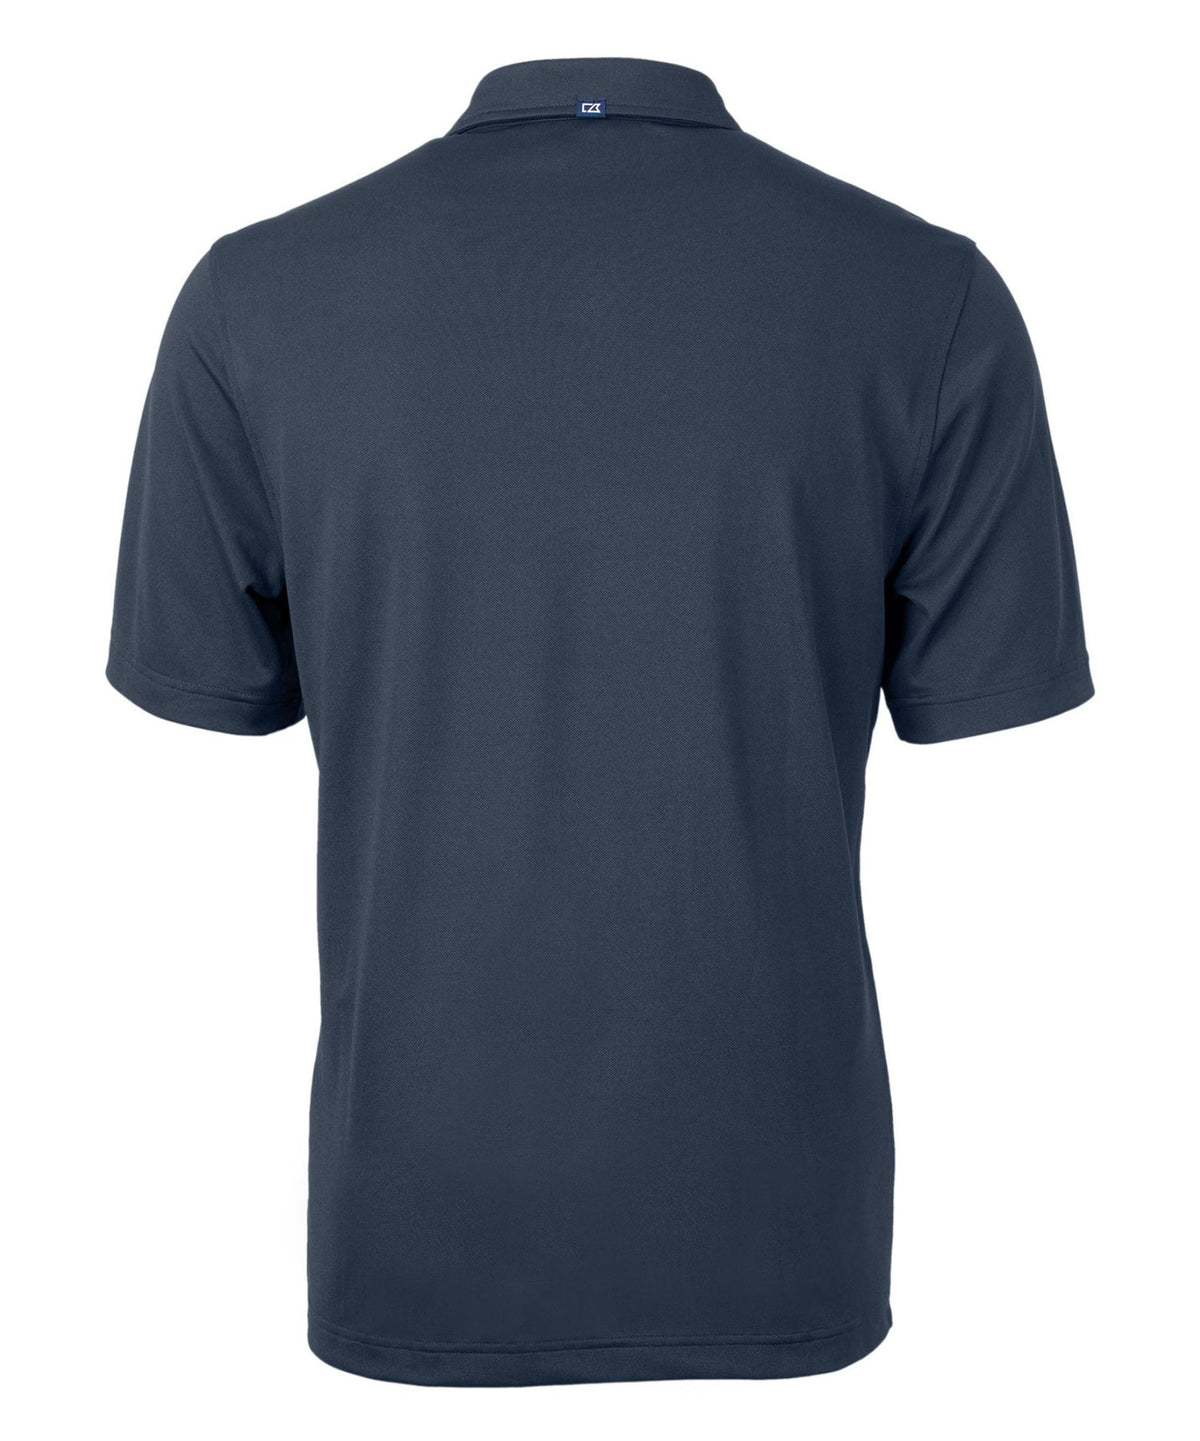 Cutter & Buck University of North Carolina Tar Heels Short Sleeve Polo Knit Shirt, Men's Big & Tall